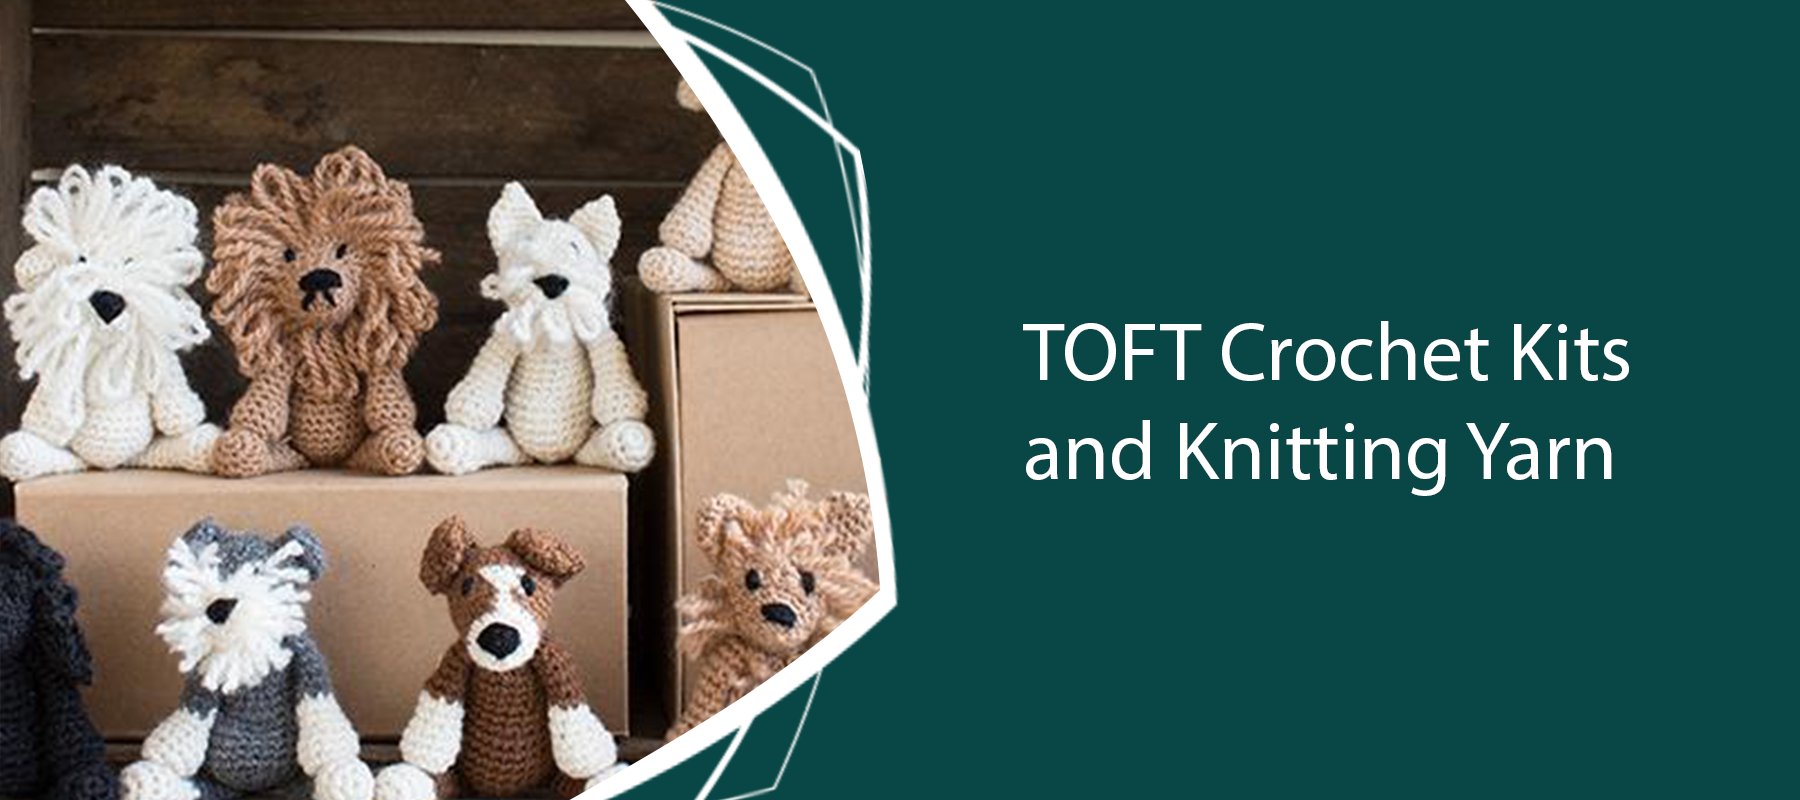 TOFT Crochet Kits and Knitting Yarn